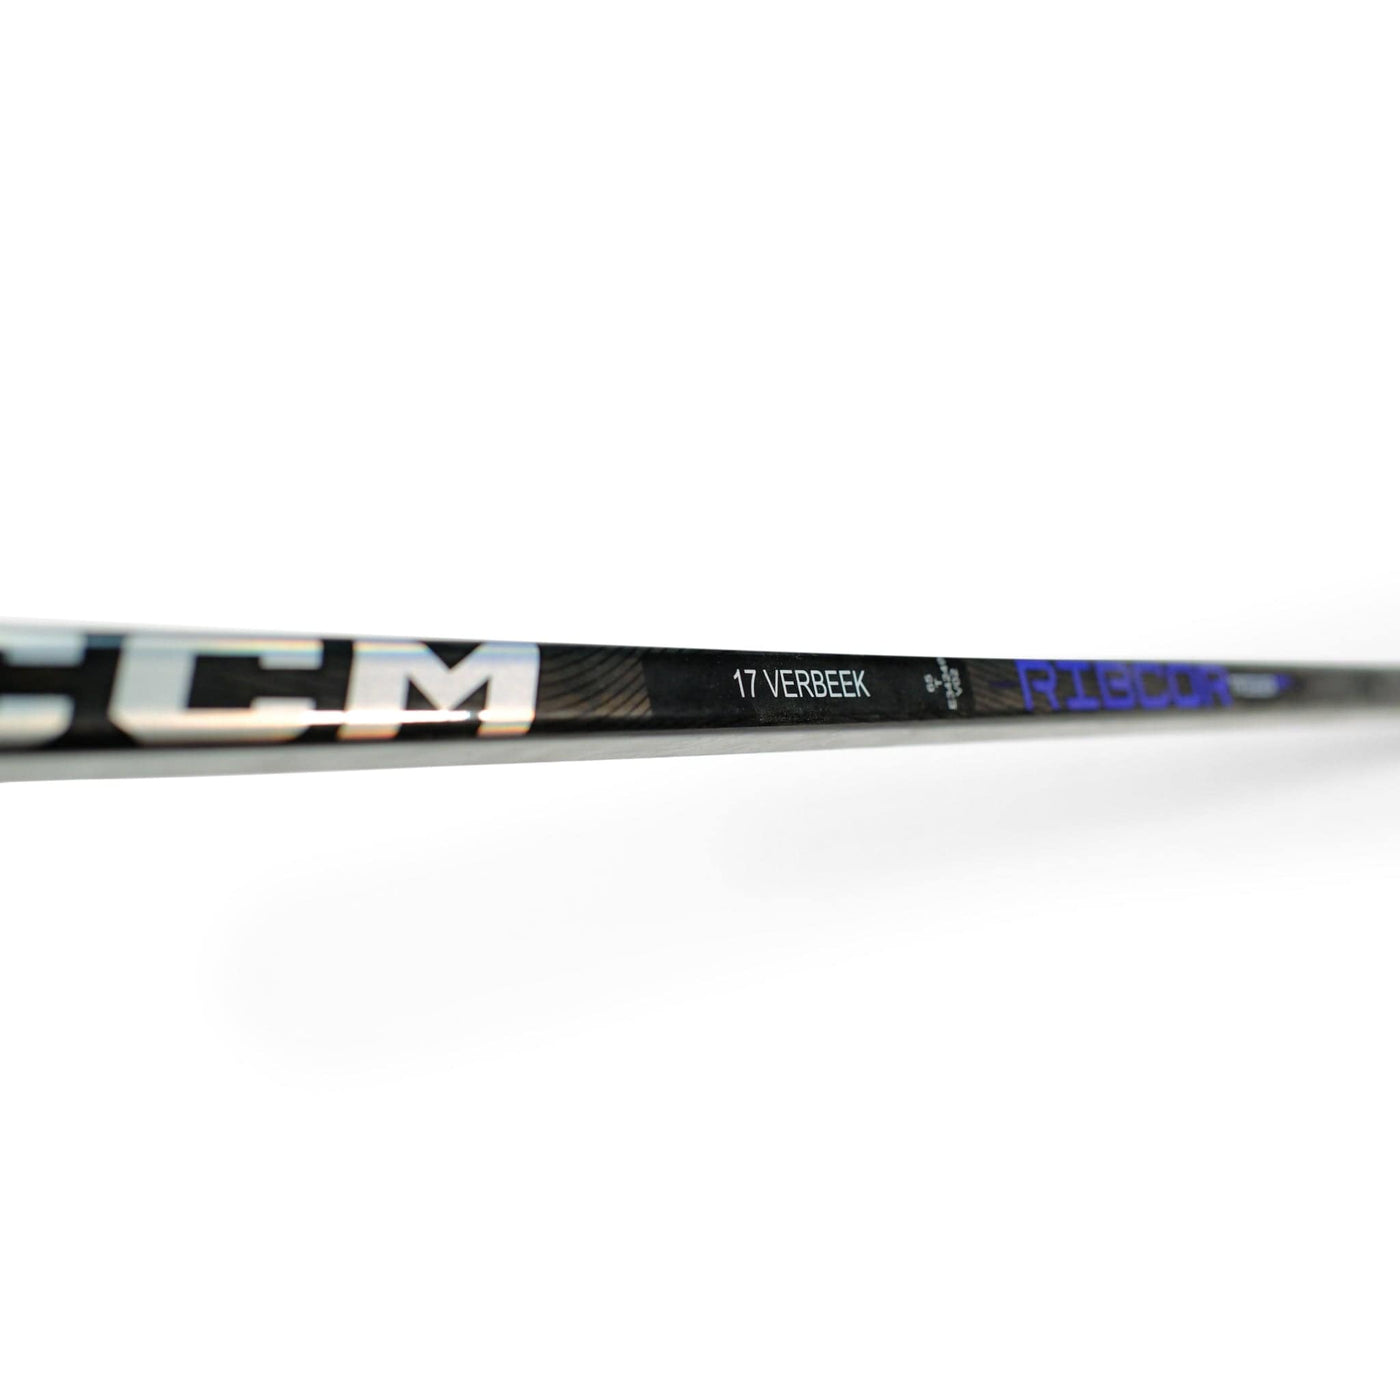 CCM RIBCOR Trigger 7 Pro Stock Senior Hockey Stick - Hayden Verbeek - The Hockey Shop Source For Sports